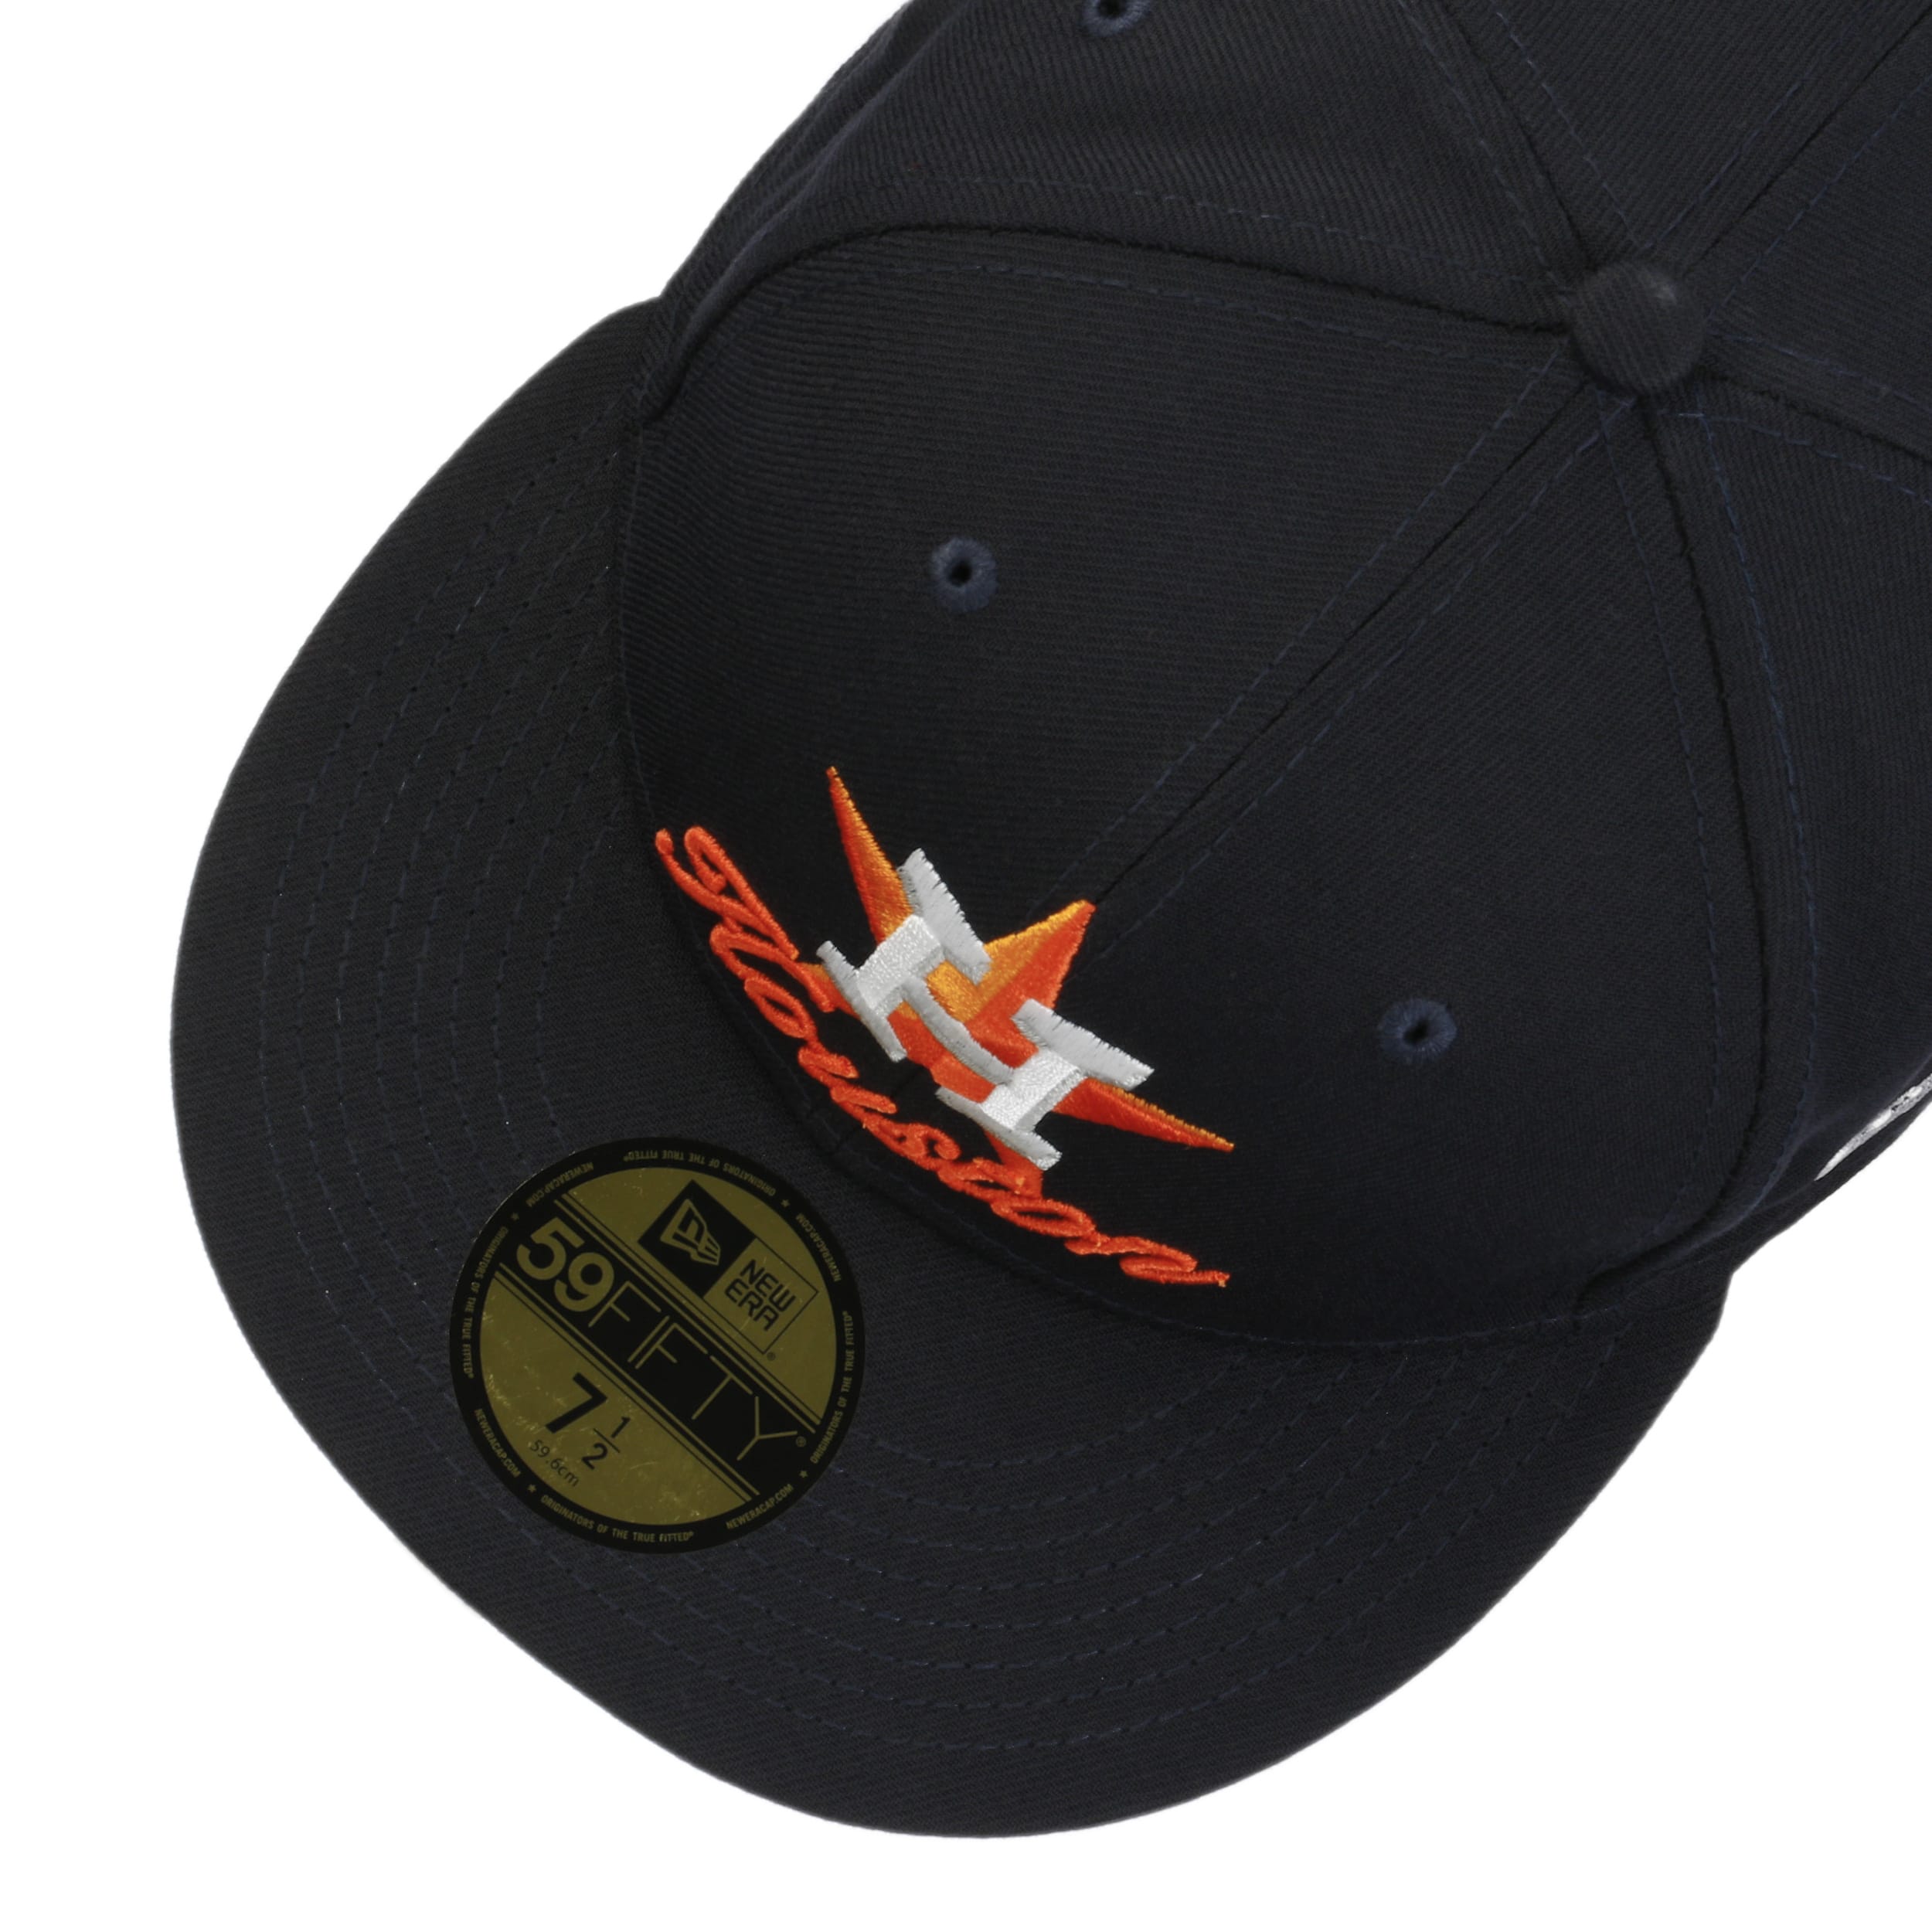 Houston Astros Clubhouse Hat